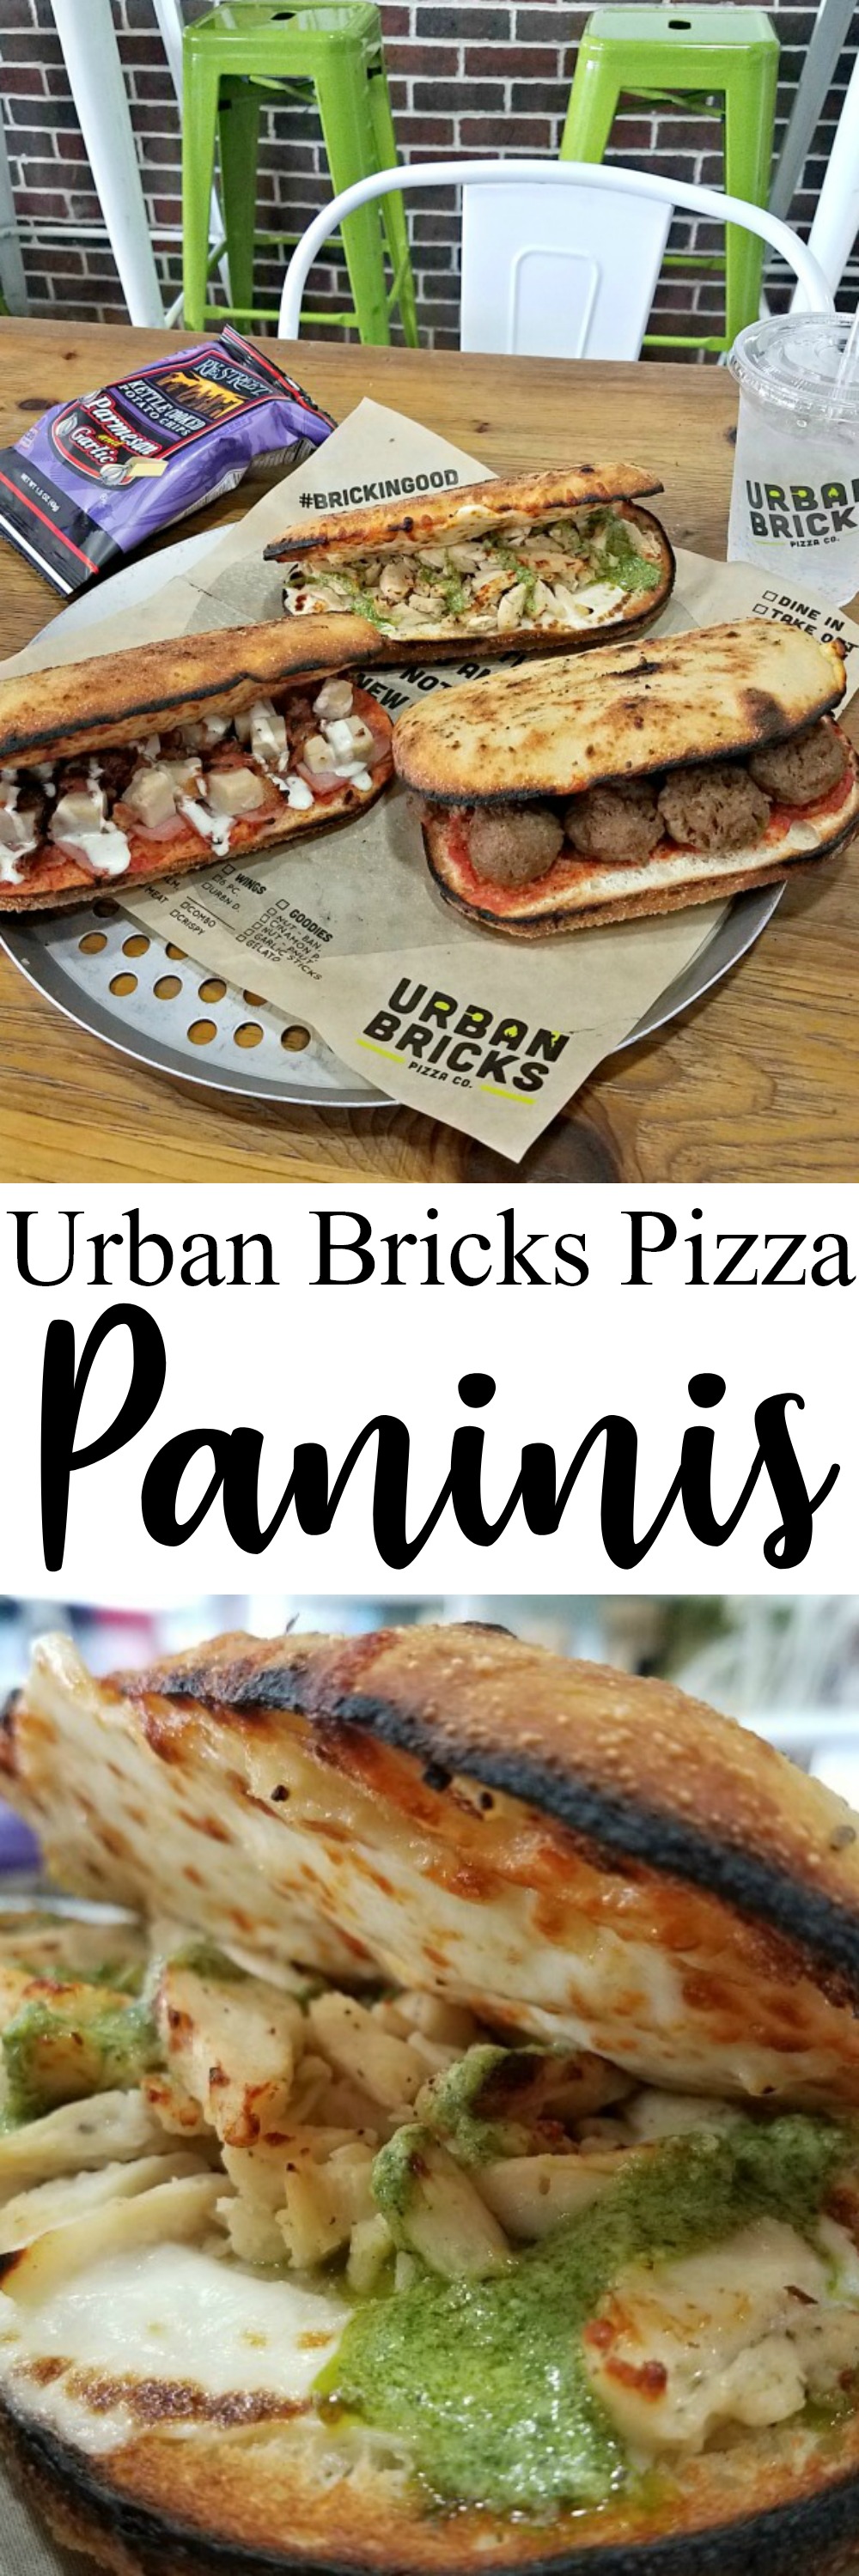 Paninis at Urban Bricks Pizza | SensiblySara.com